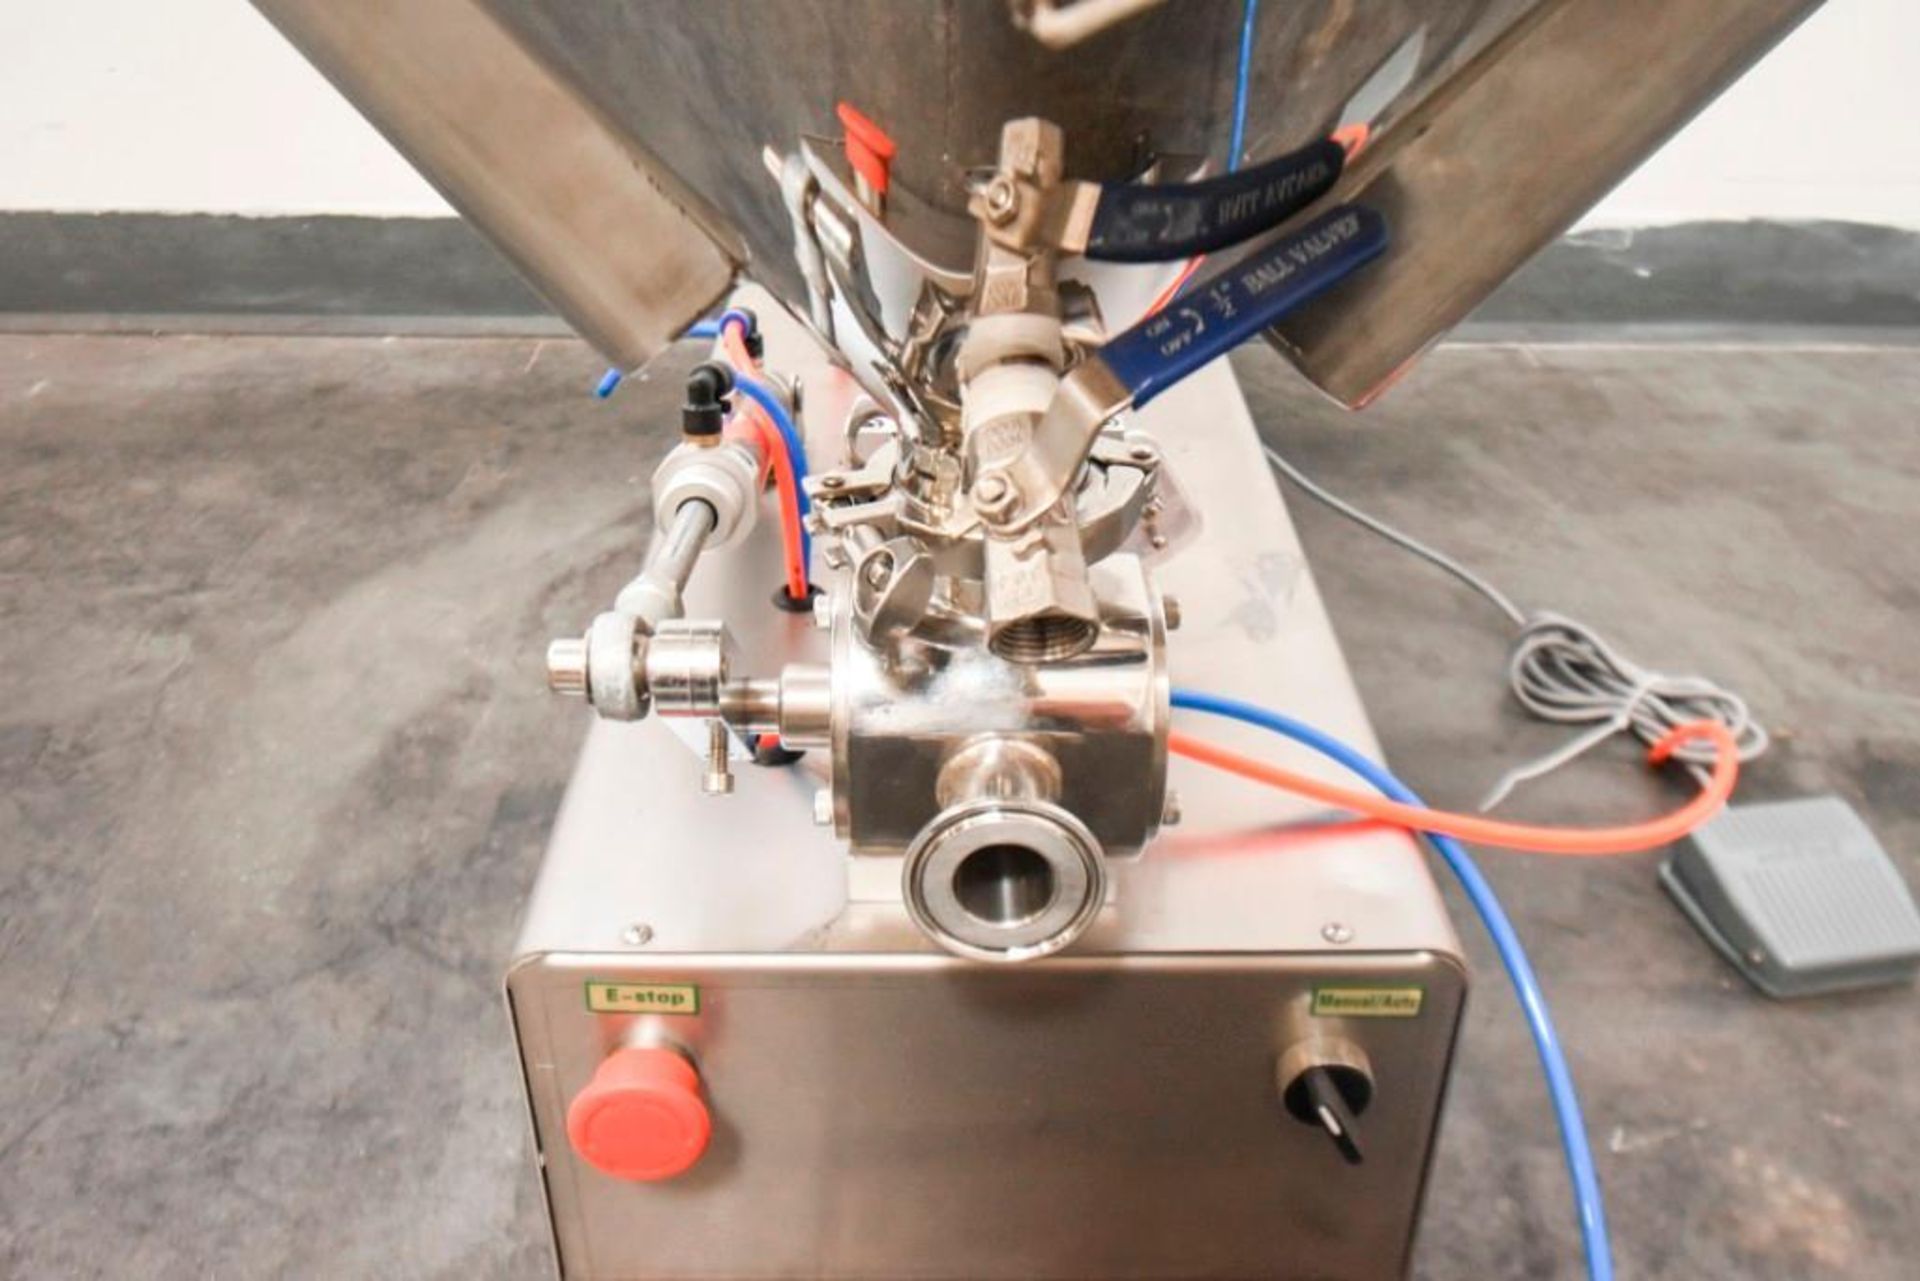 Quantitative Semi-Automatic Paste Liquid Filling Machine G1WG with Heated Hopper & Mixing Motor - Image 8 of 15